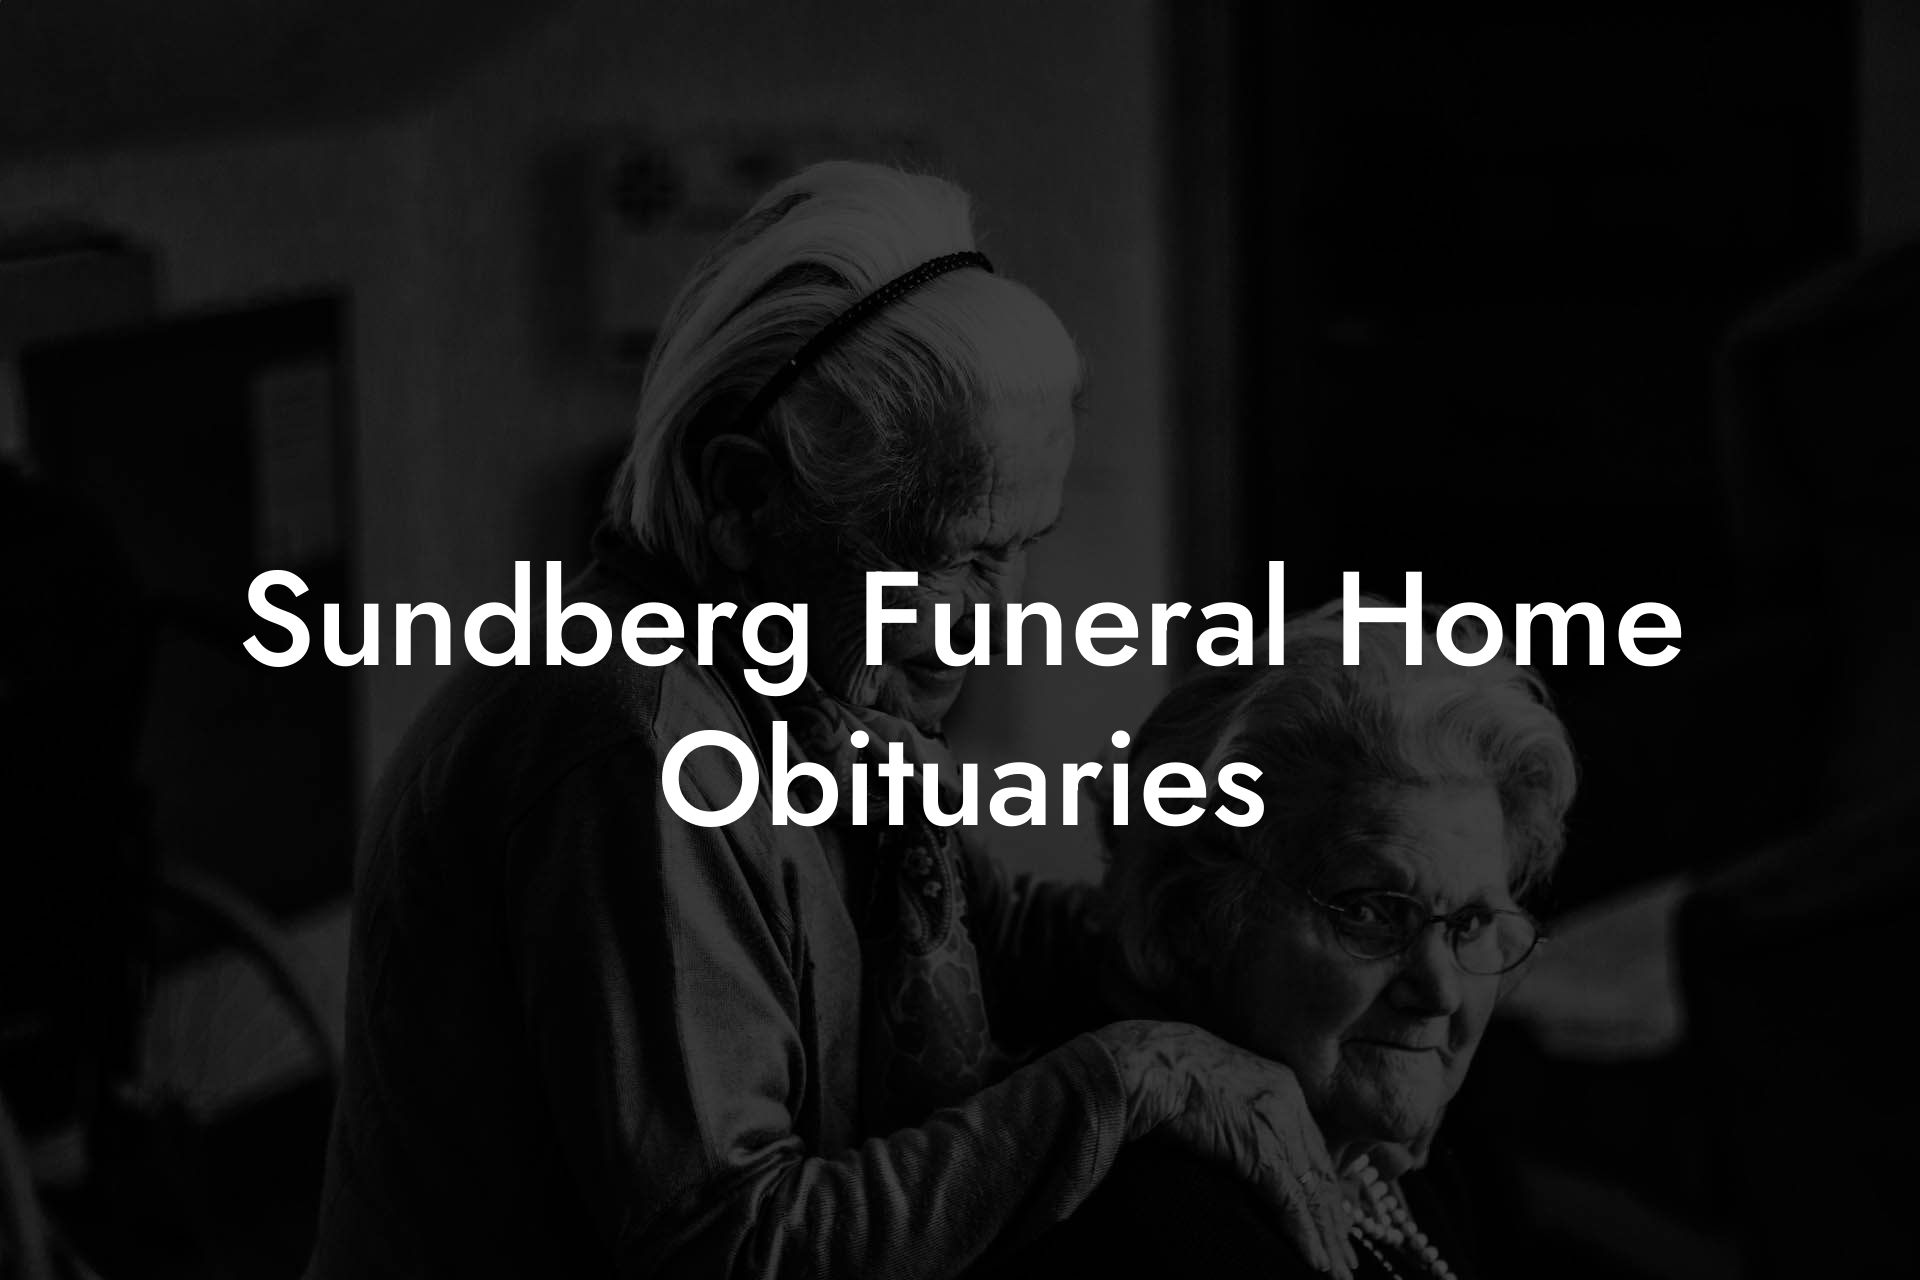 Sundberg Funeral Home Obituaries